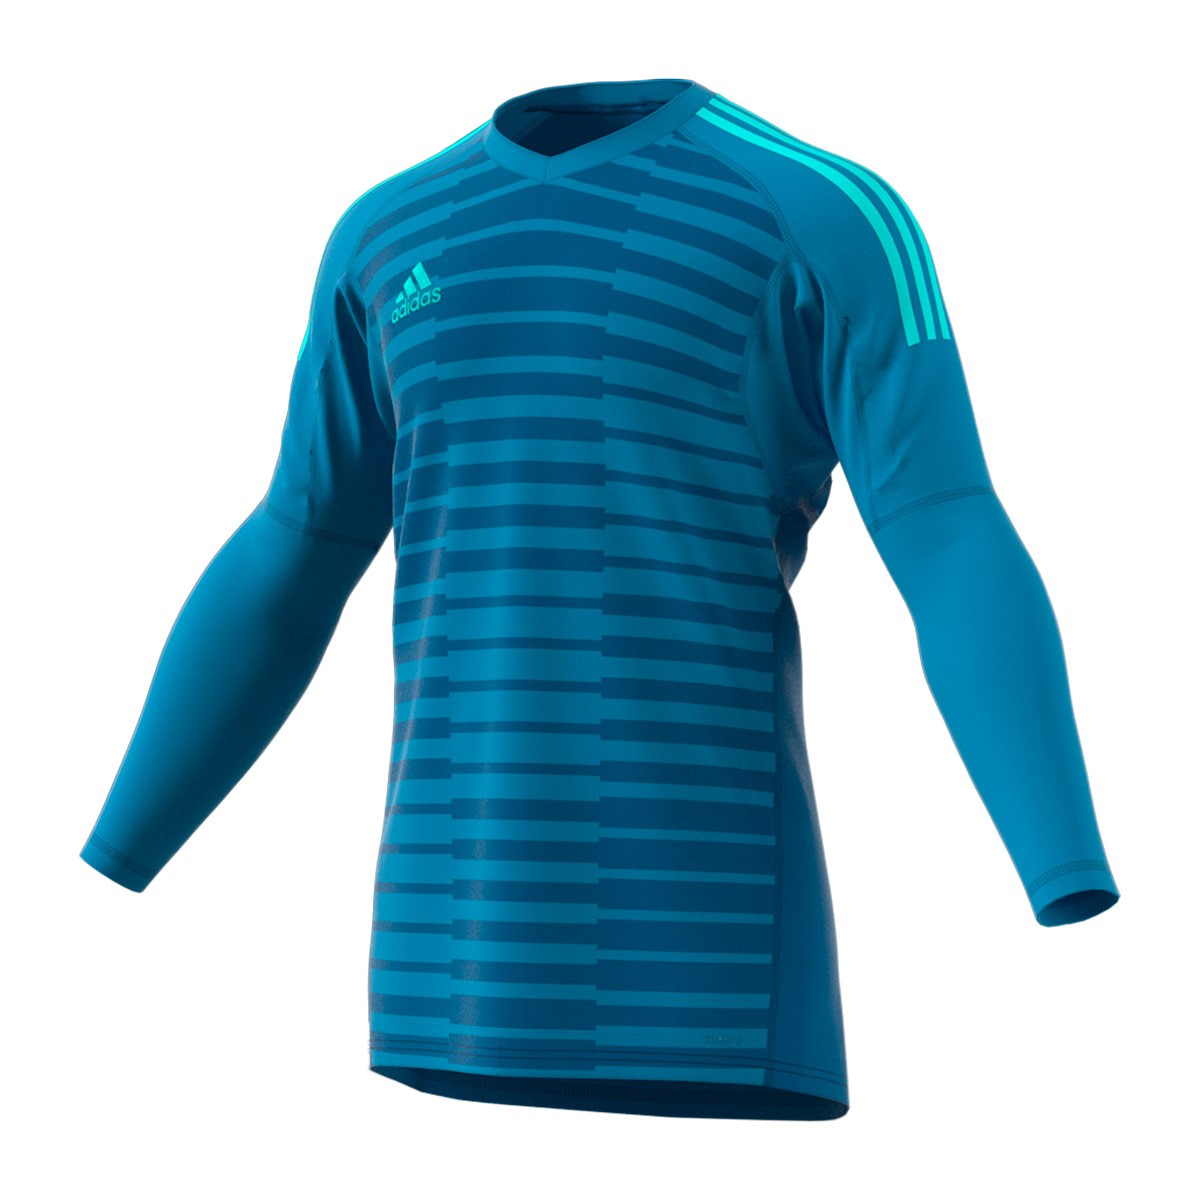 adidas goalkeeper kits 2018